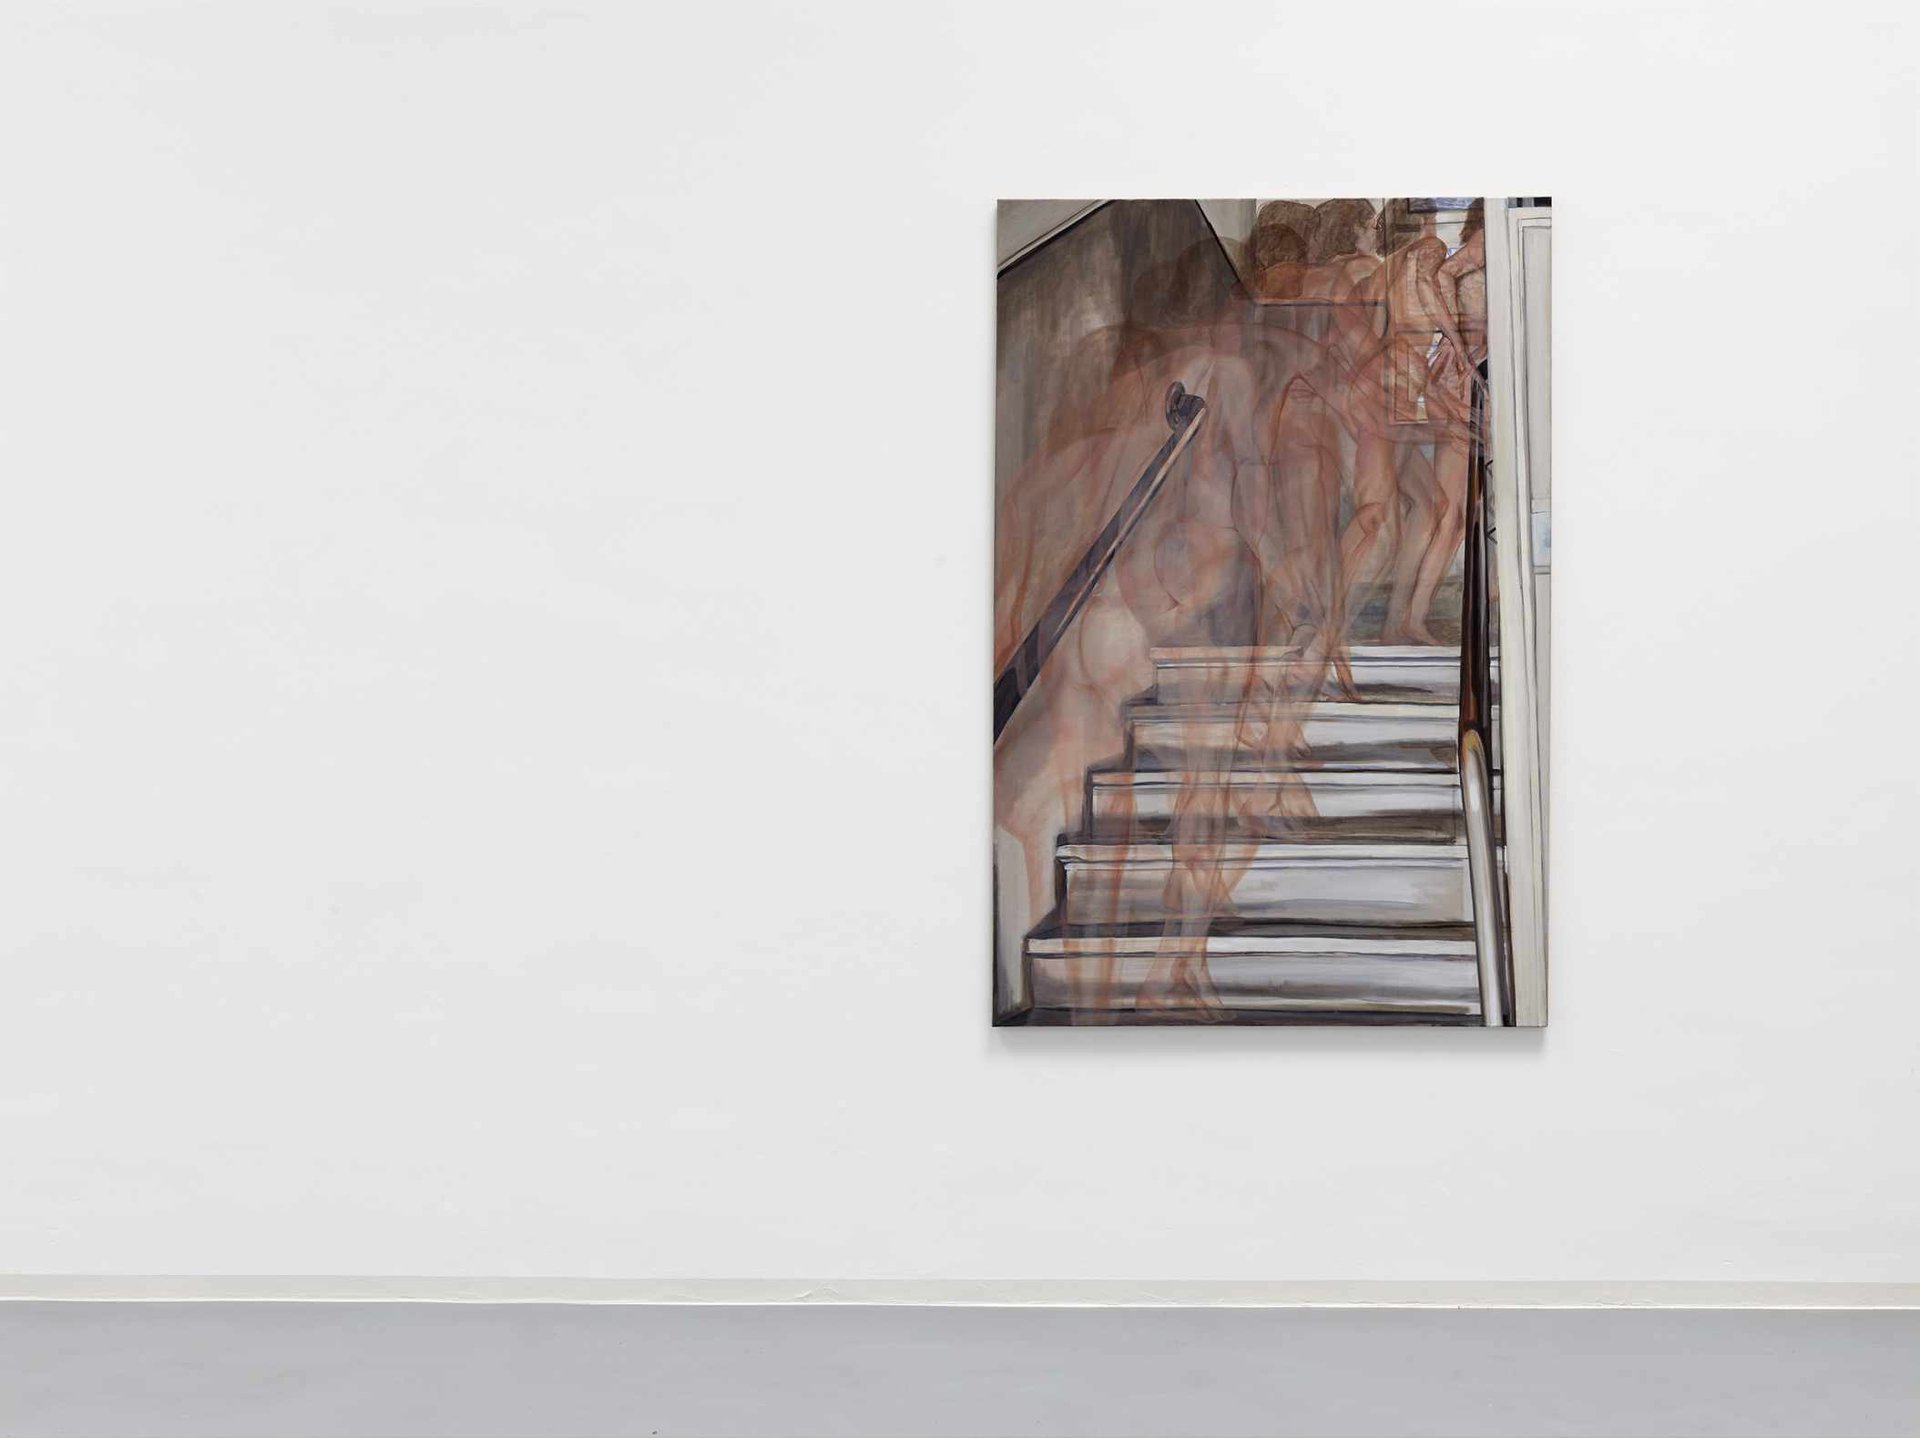 Jana Euler, Nude climbing up stairs, installation view, 2014, Bonner Kunstverein, Courtesy the artist. Photo: Simon Vogel